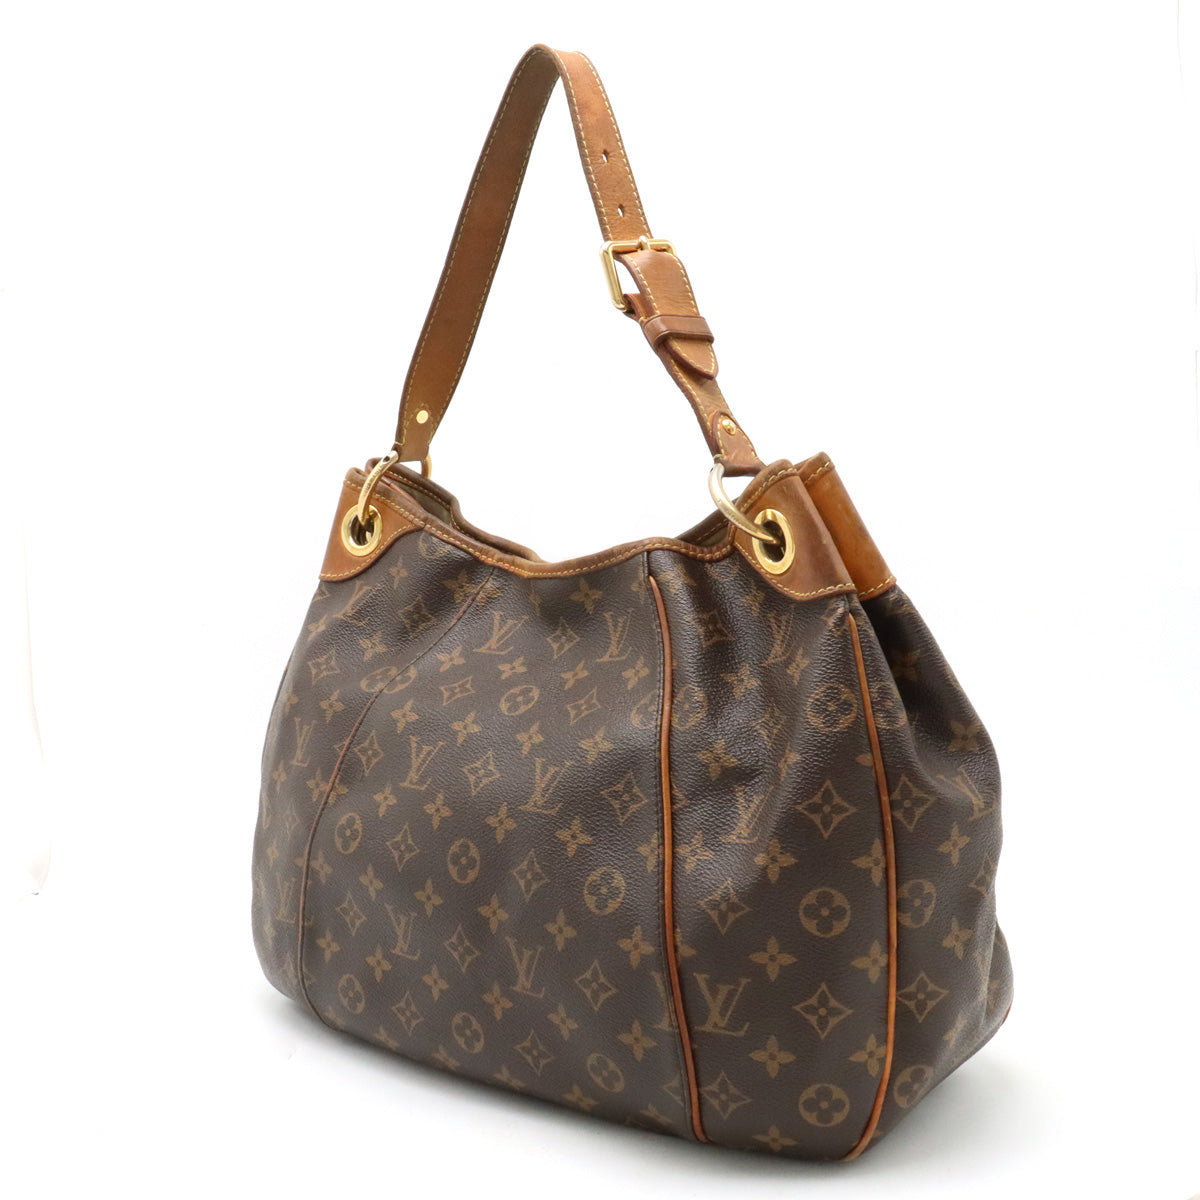 LOUIS VUITTON Louis Vuitton Monogram Galerie PM Shoulder Bag One Shoulder Bag Shoulder Bag M56382